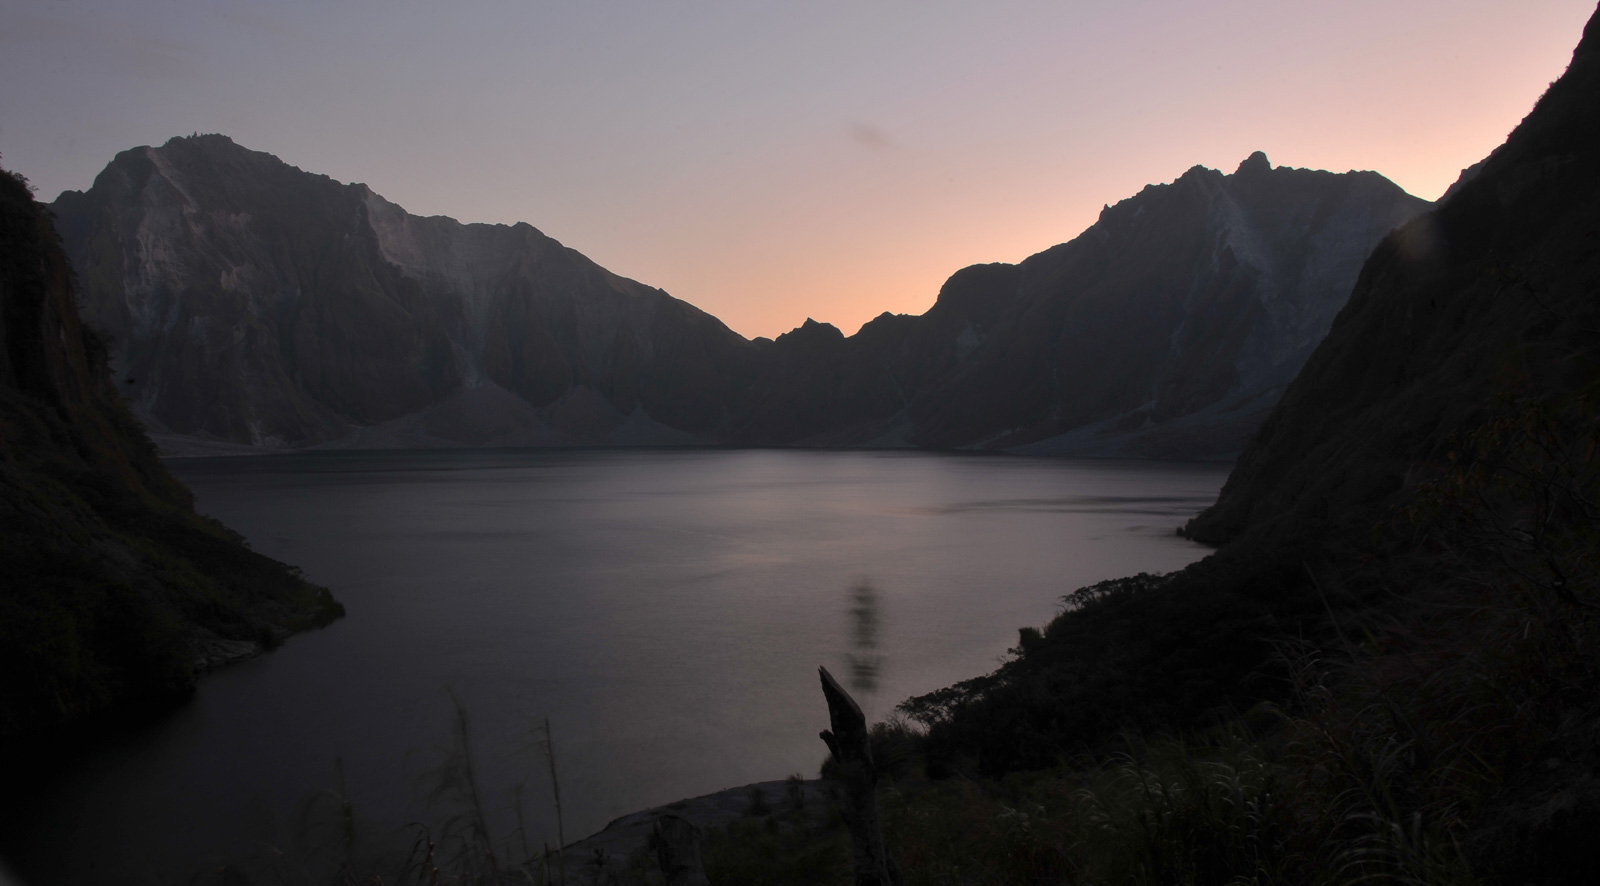 Pinatubo [28 mm, 13.0 Sek. bei f / 22, ISO 100]